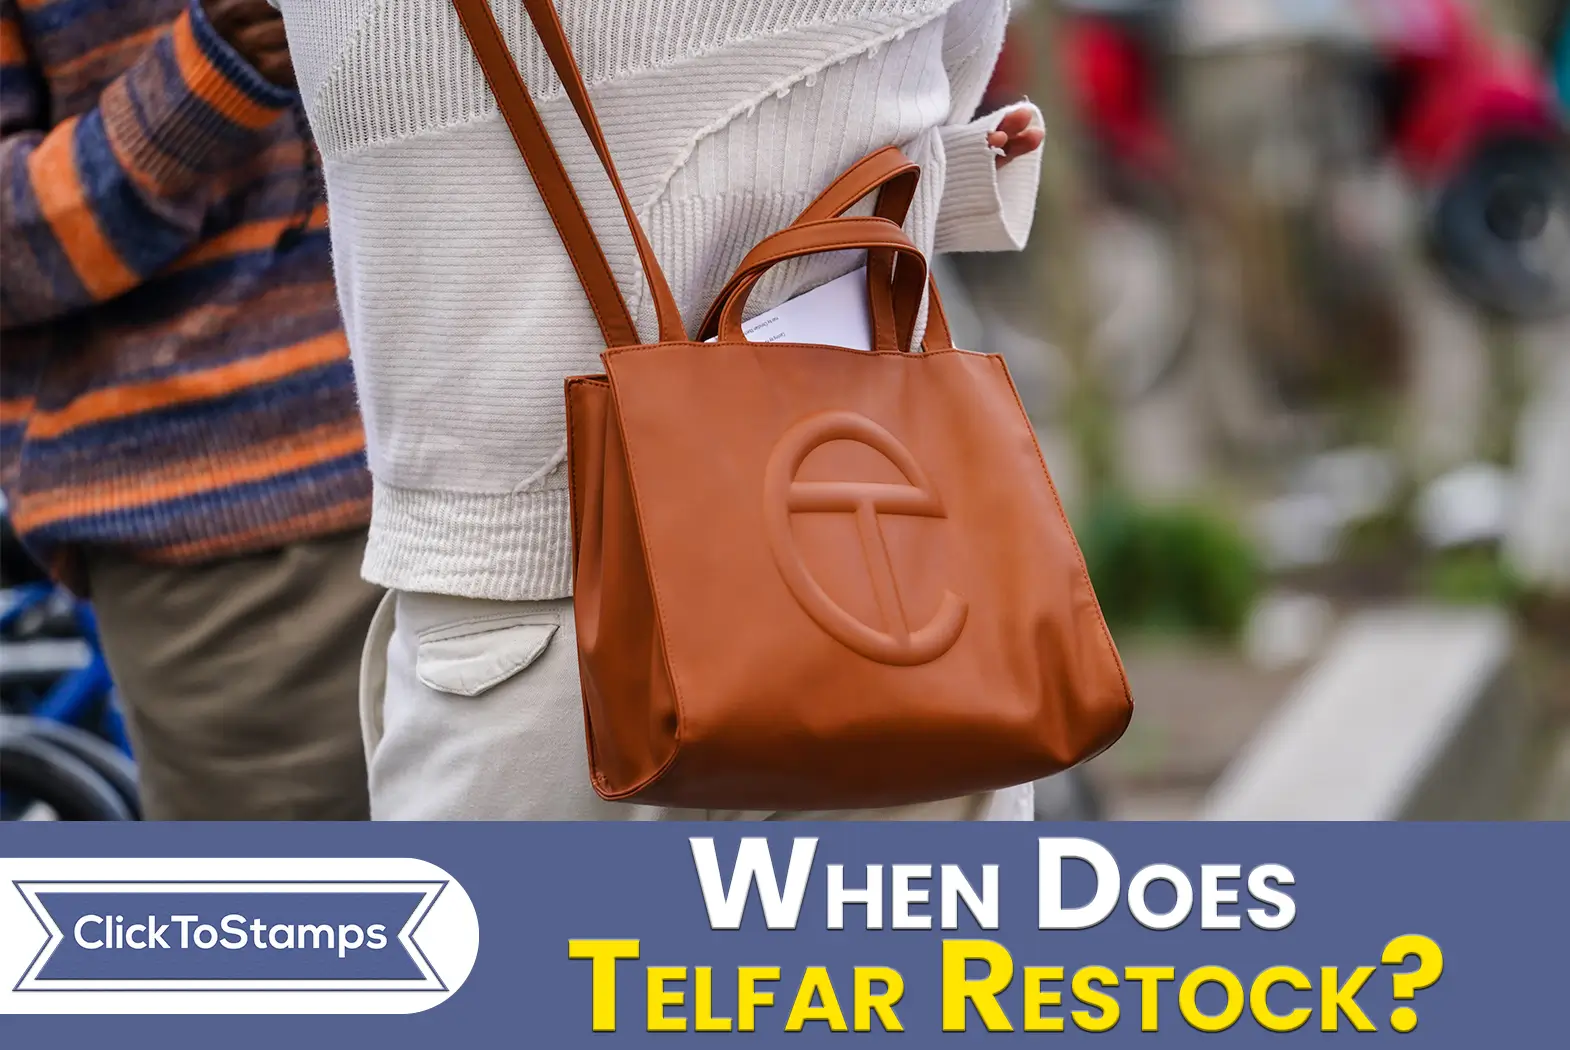 When Does Telfar Restock